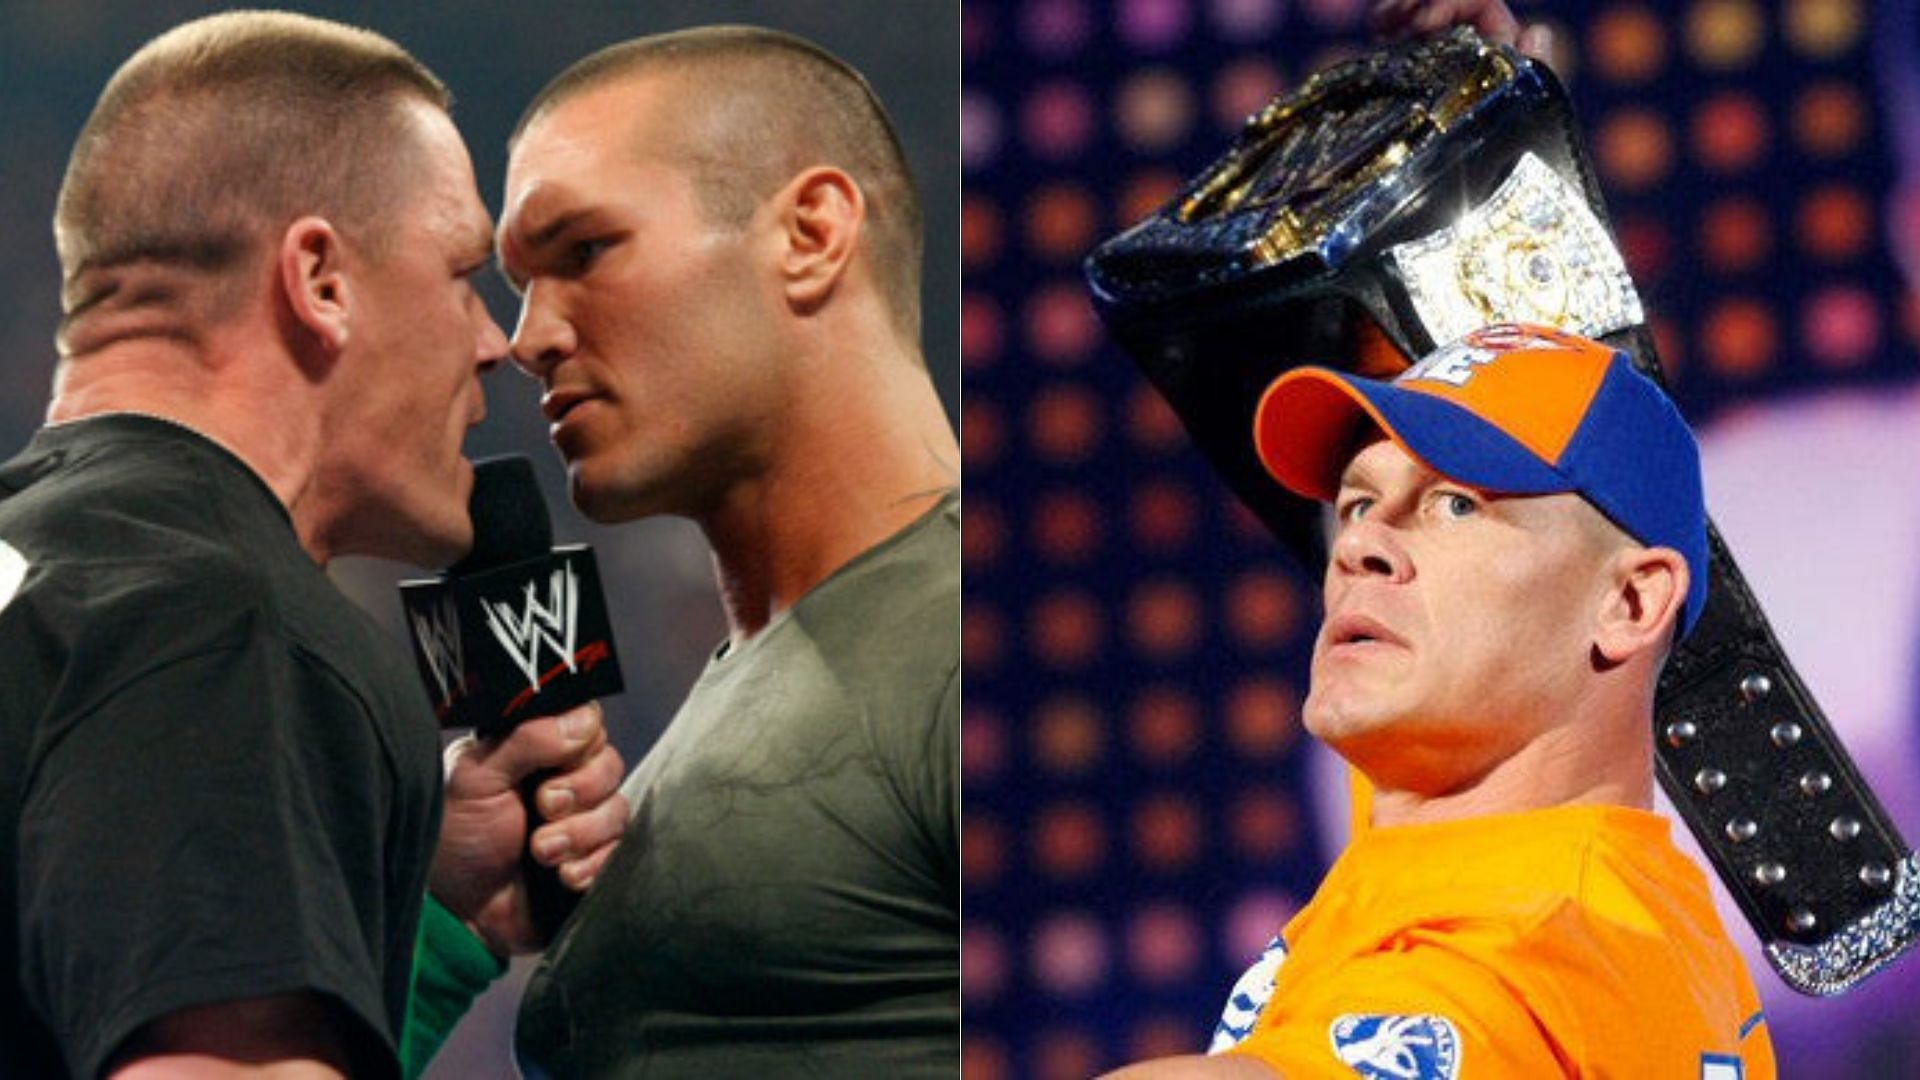 John Cena feuded with Randy Orton throughout 2009.